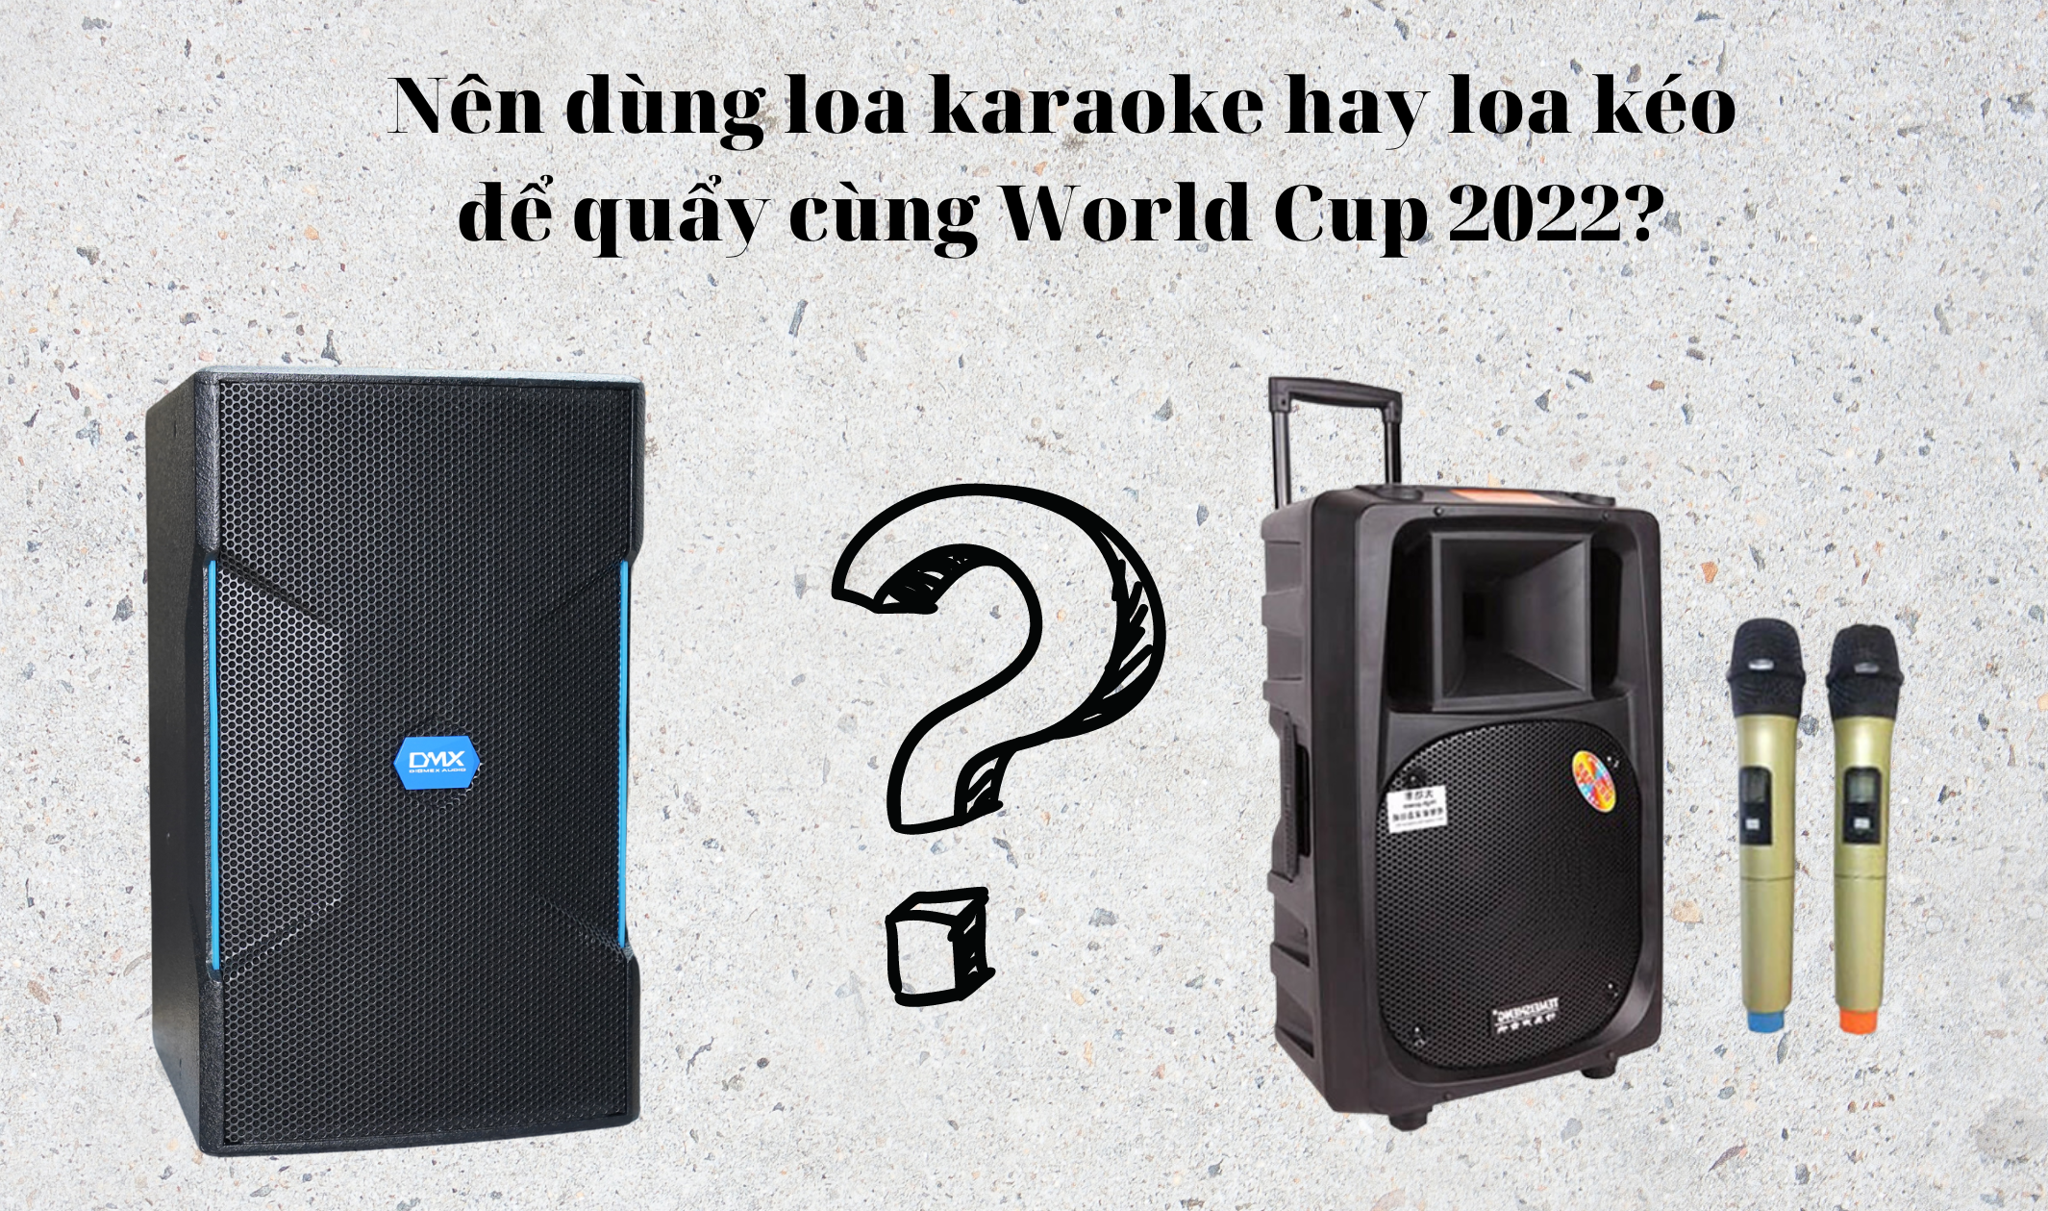 hinh anh nen mua loa karaoke hay loa keo de quay cung mua world cup 2022 so 3